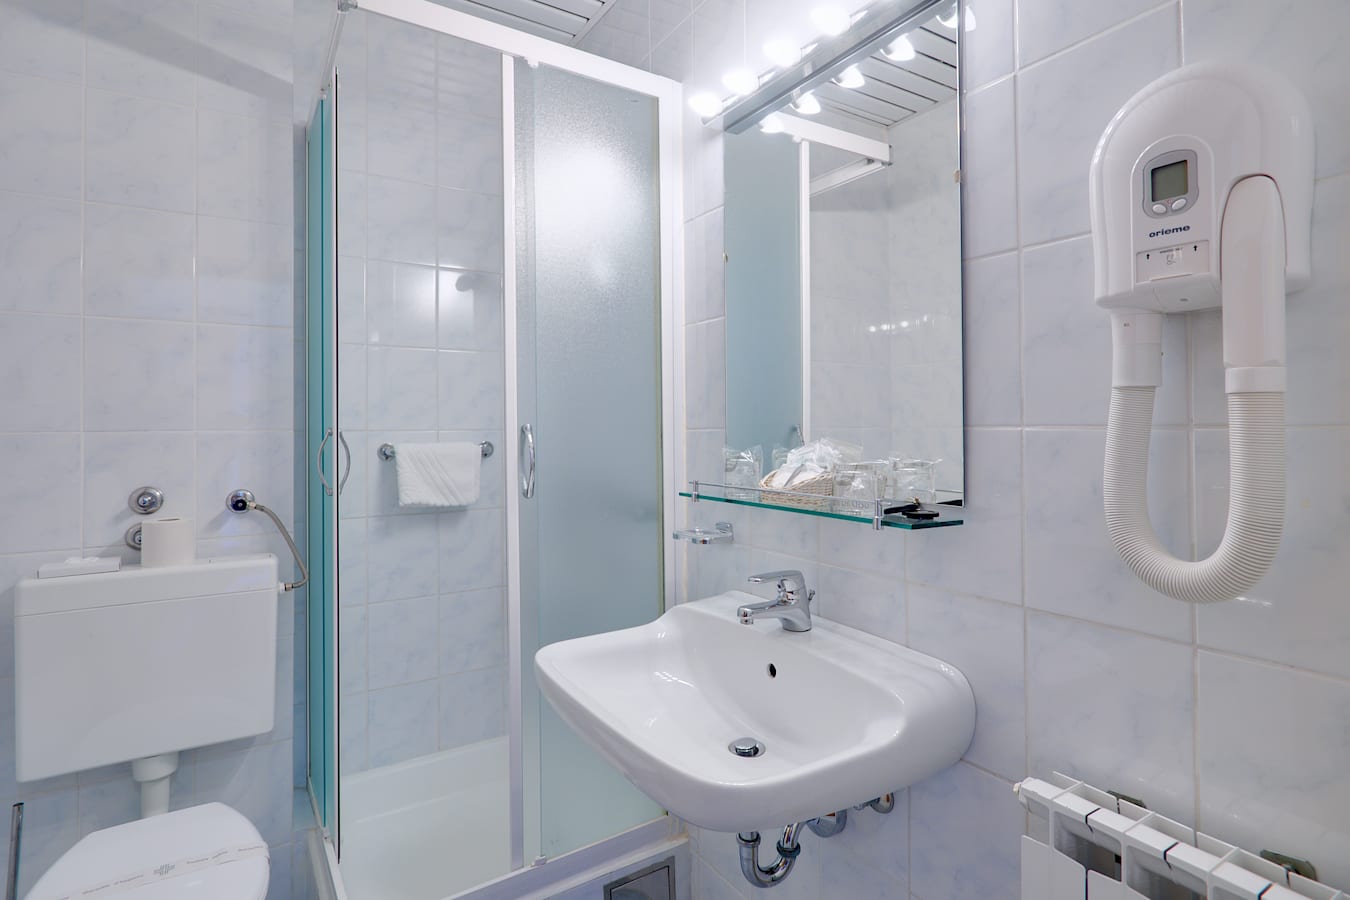 komodor-hotel-rooms-bathroom-shower_1.jpg